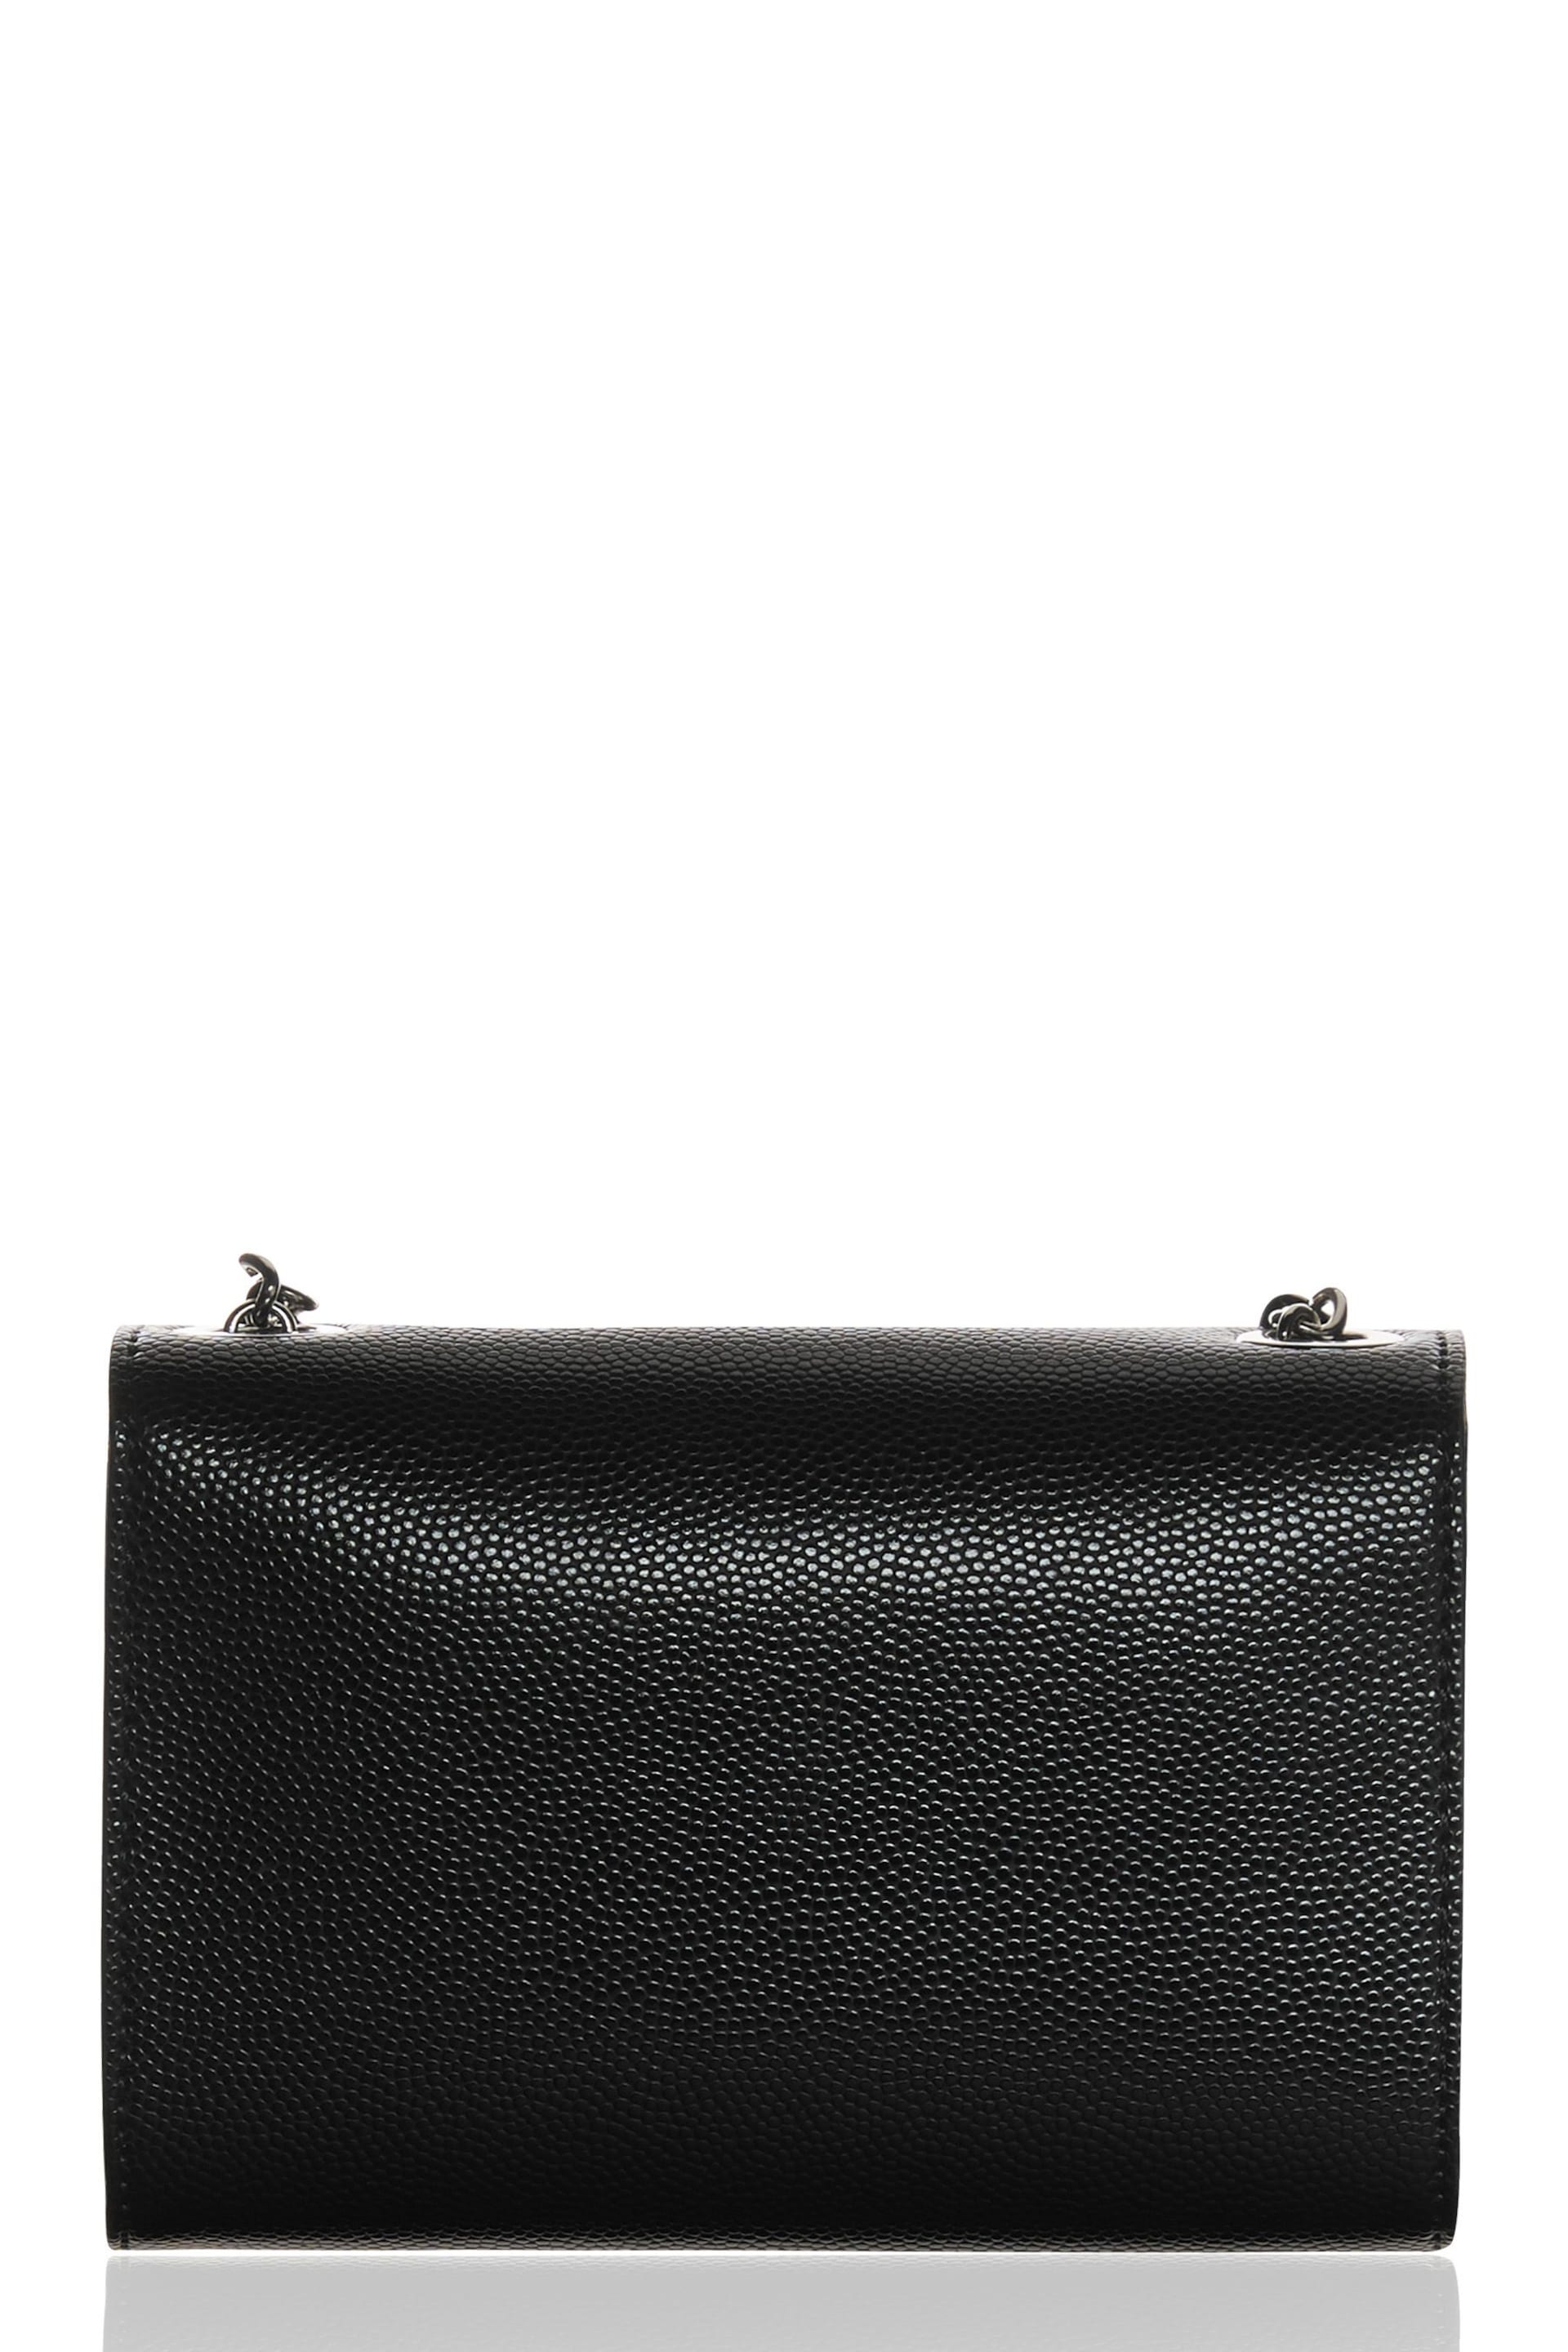 Valentino Bags Black Cross-Body Divina Tassel Bag - Image 3 of 5